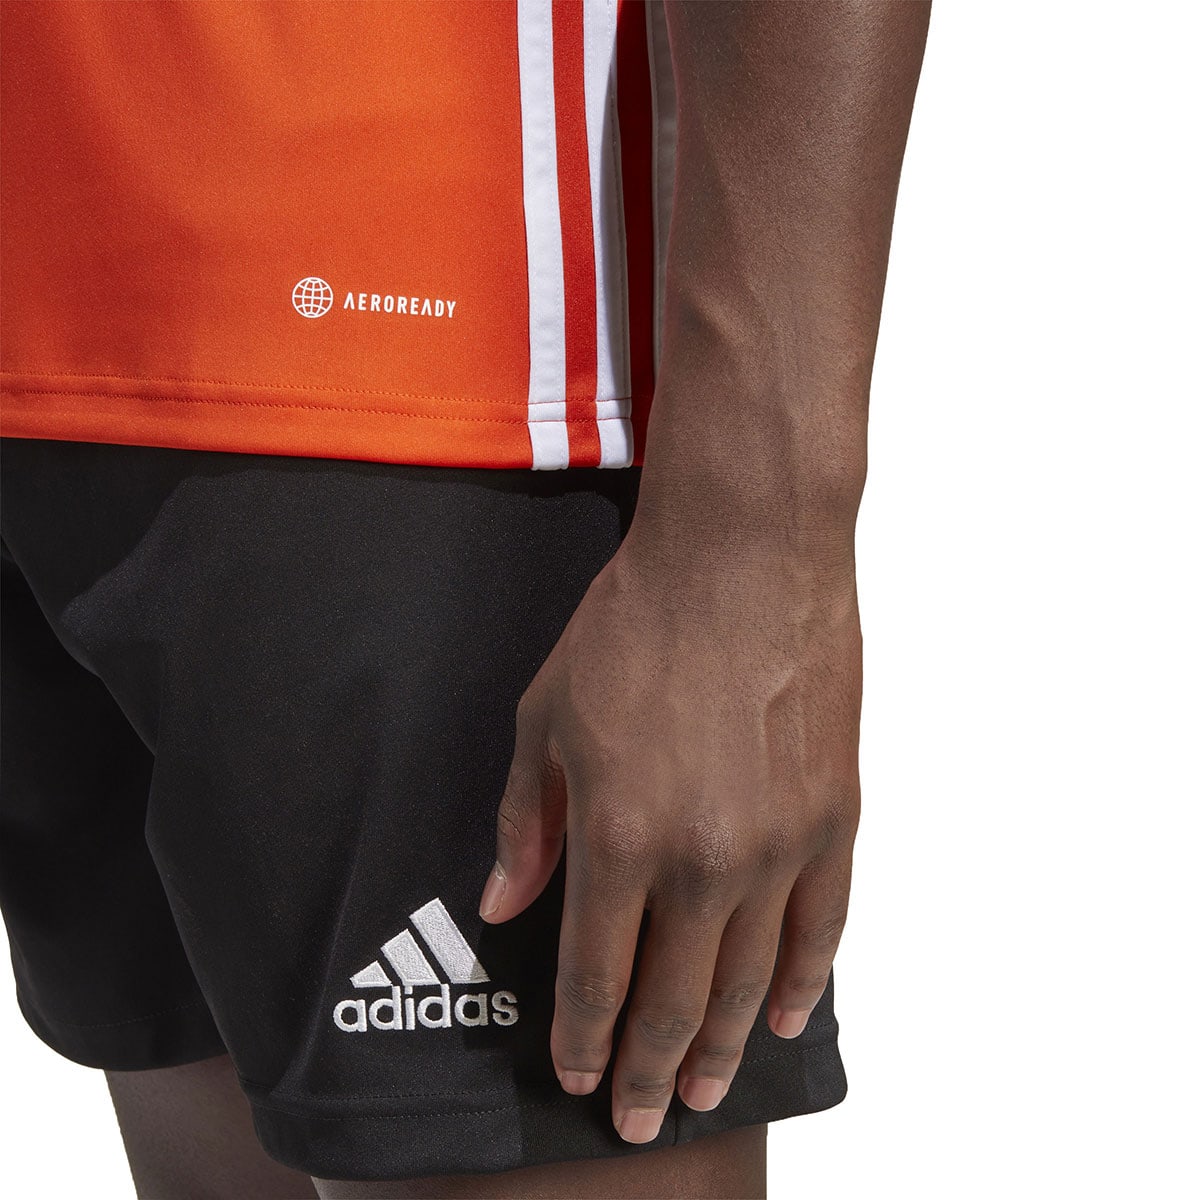 Adidas Herren Trikot Tabela 23 orange-weiß